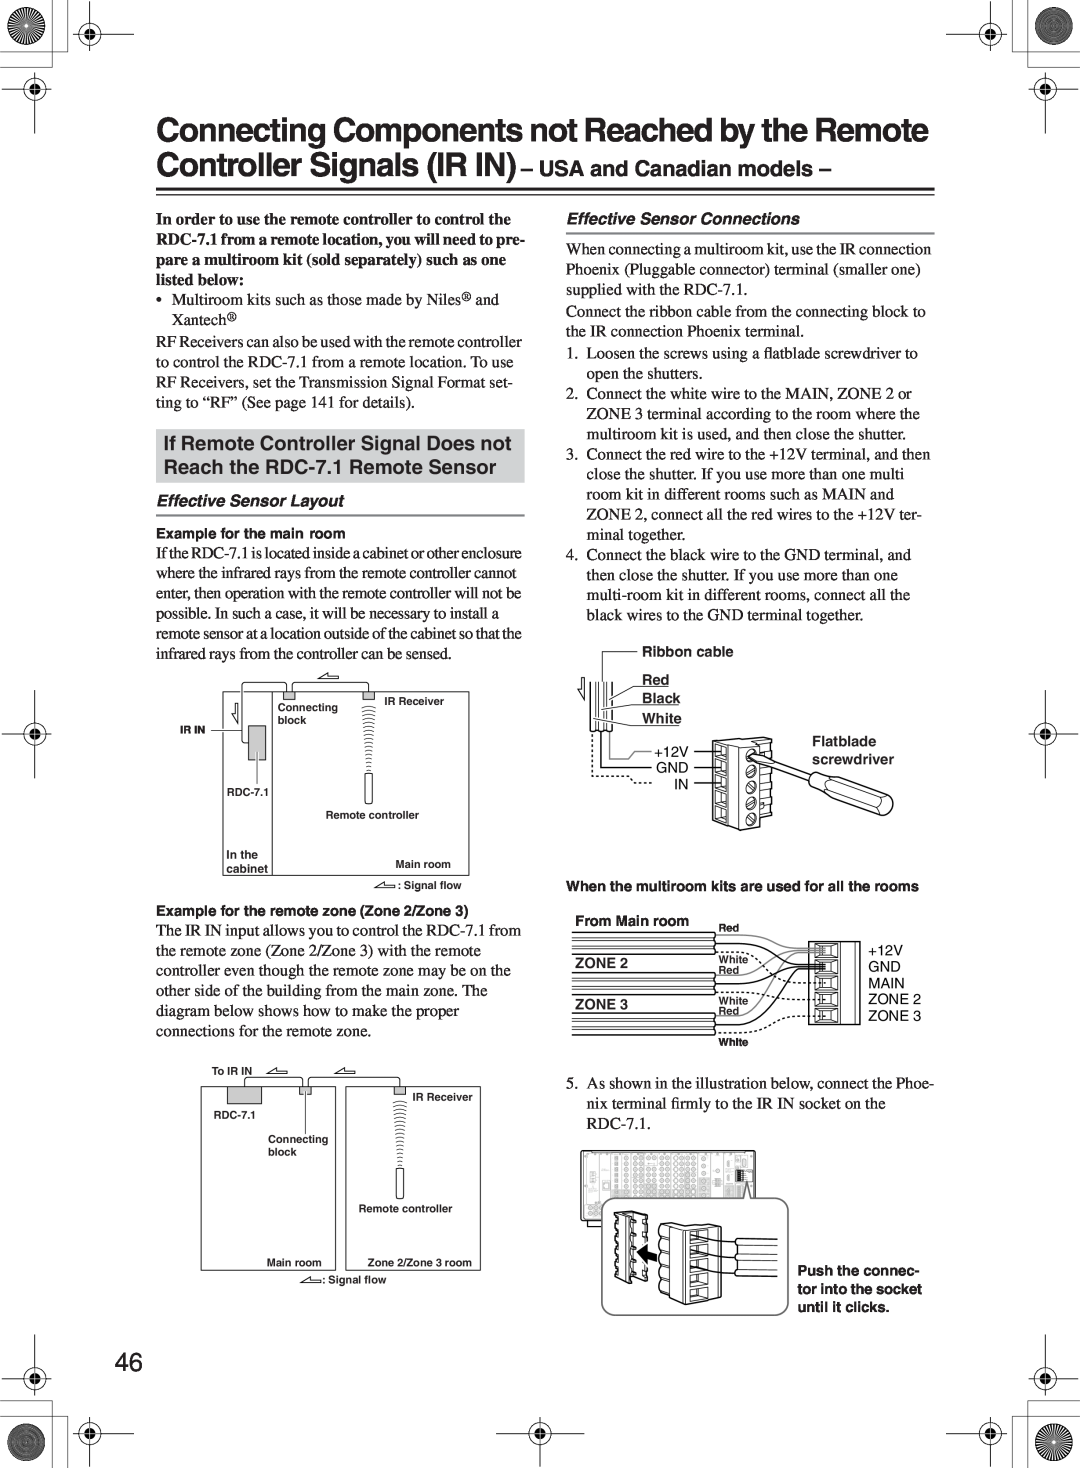 Integra RDC-7.1 instruction manual Effective Sensor Layout, Effective Sensor Connections 